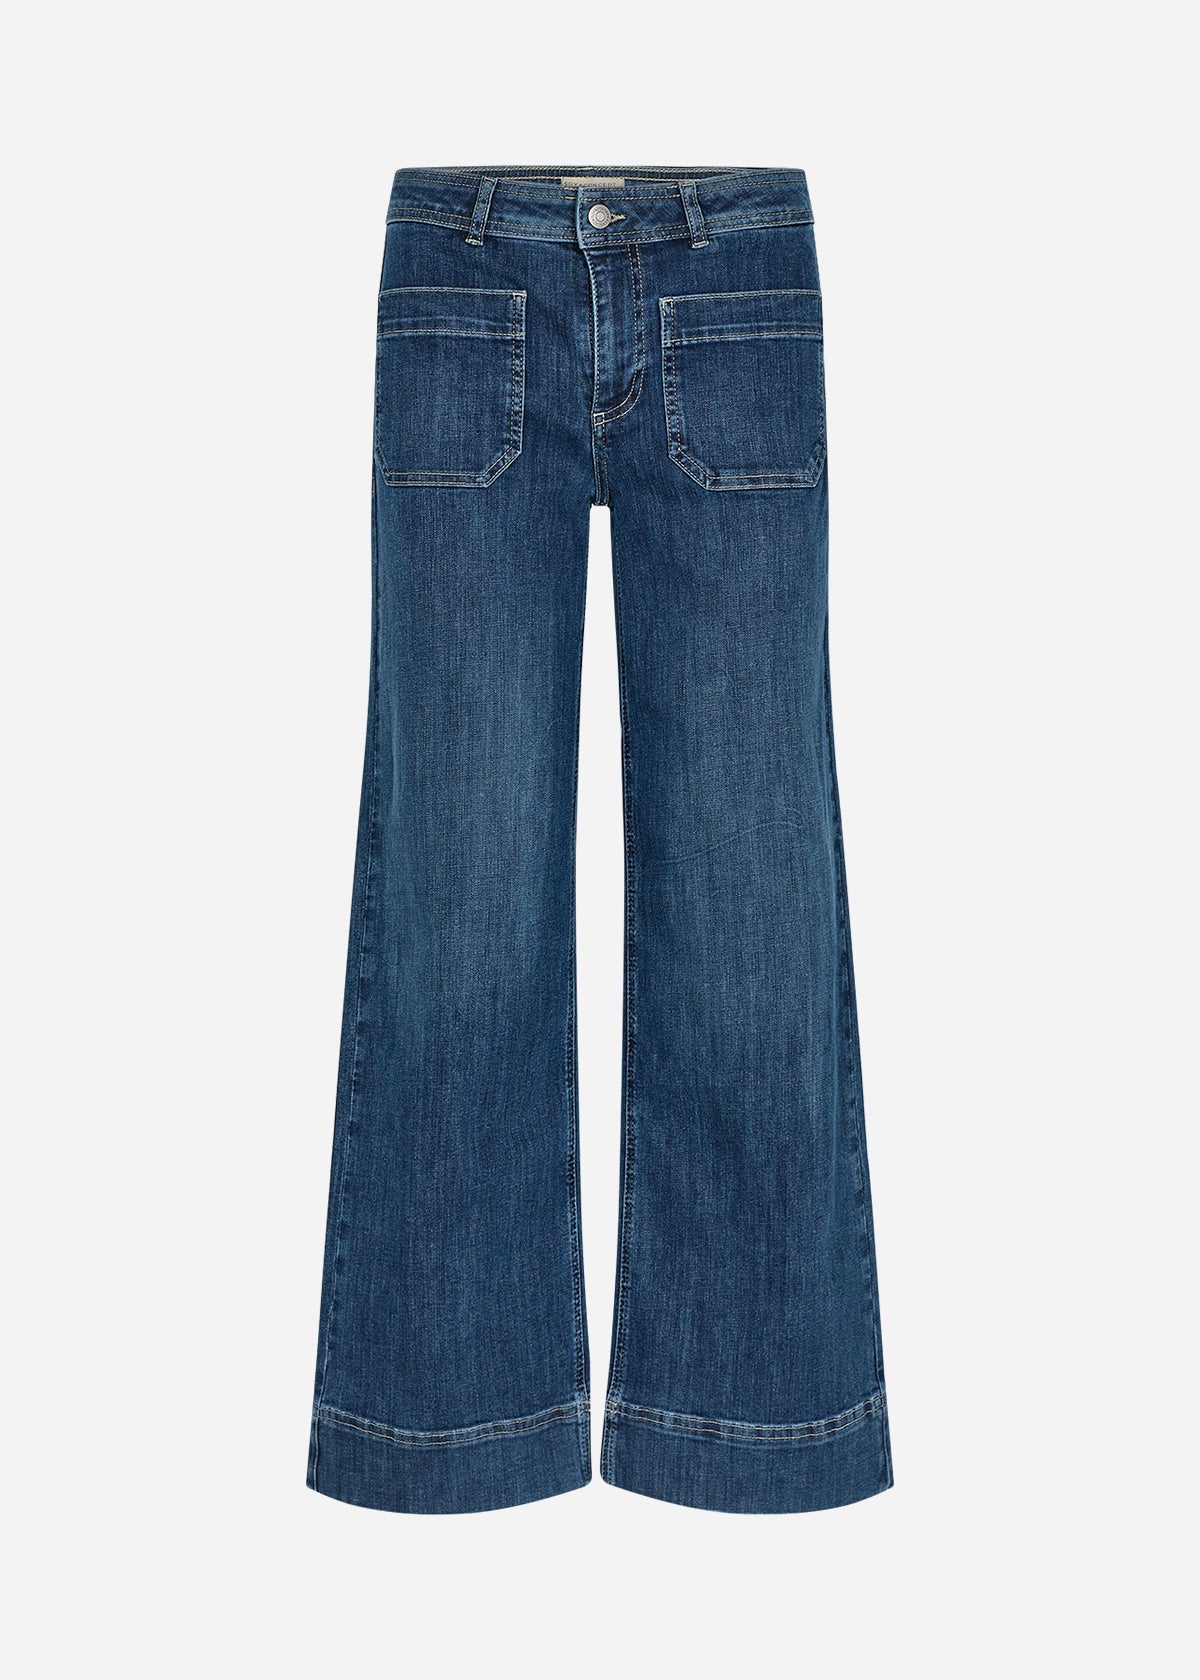 Kimberley Jeans